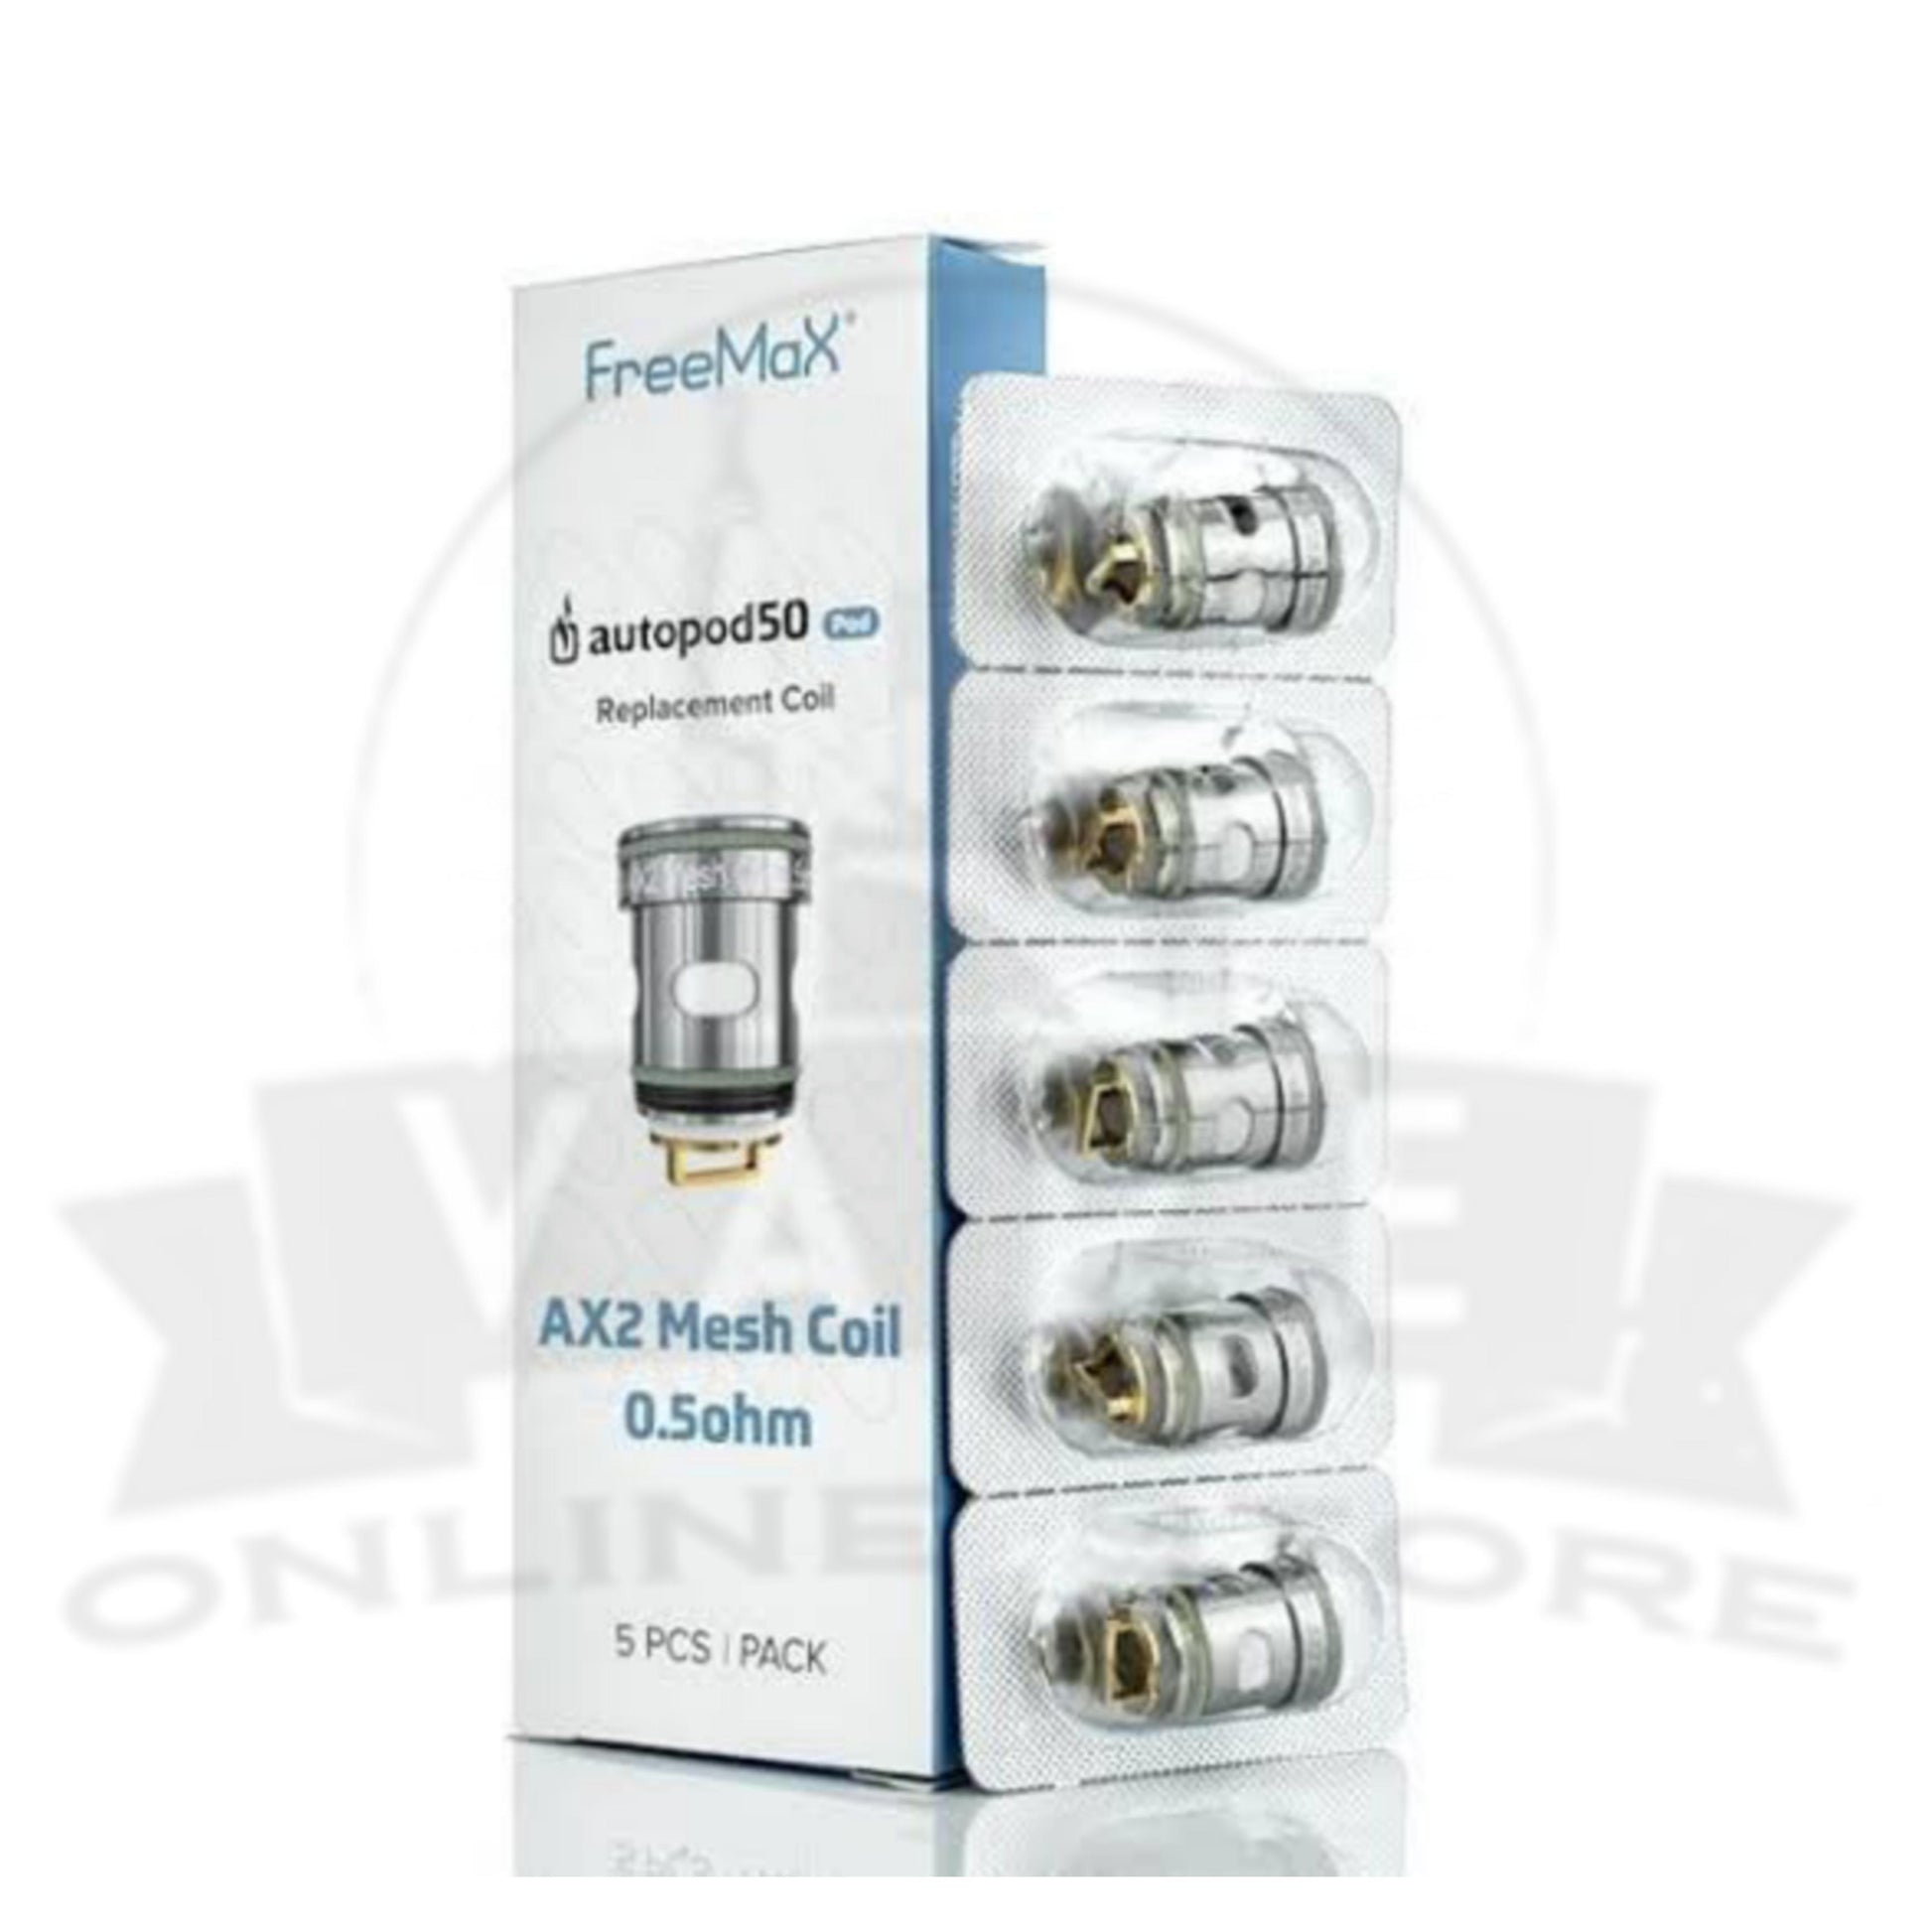 FreeMax Autopod50 Replacement Mesh Coils